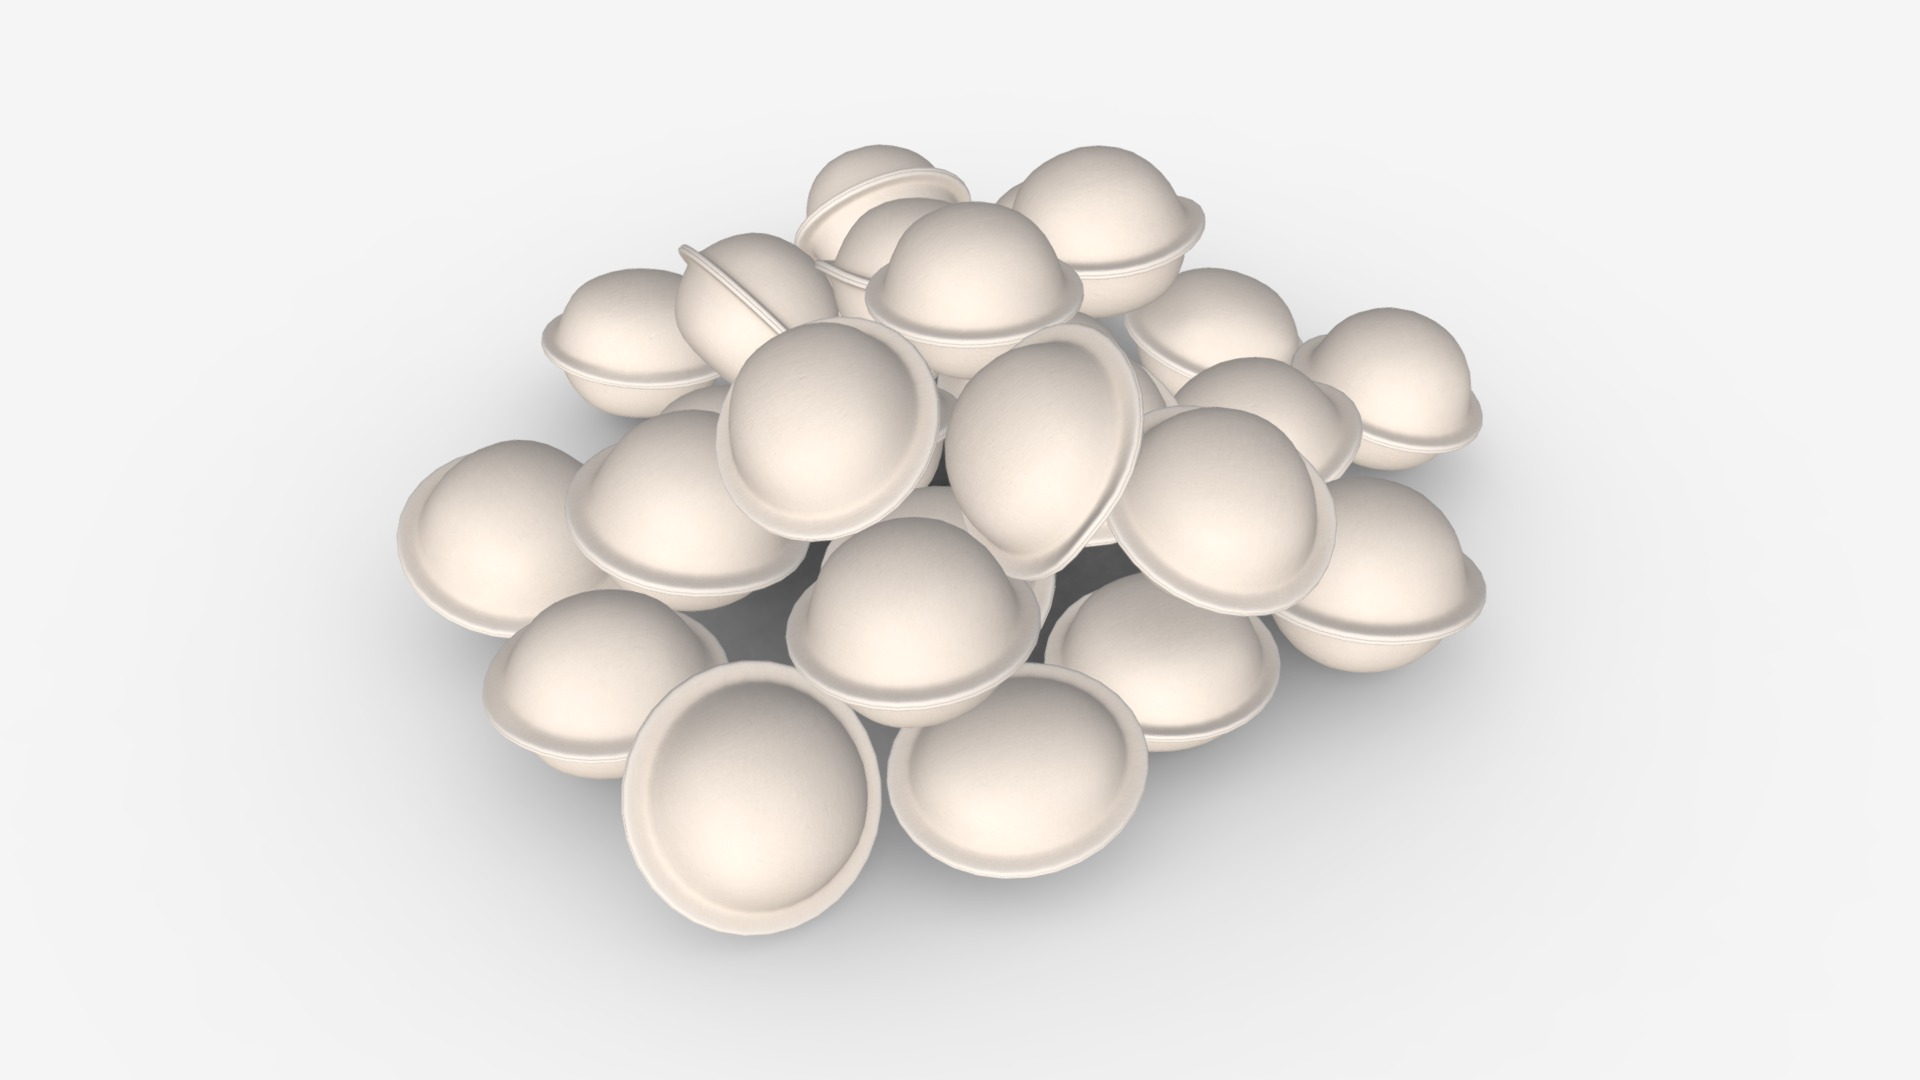 3D model dumplings 04 - This is a 3D model of the dumplings 04. The 3D model is about a group of white balls.